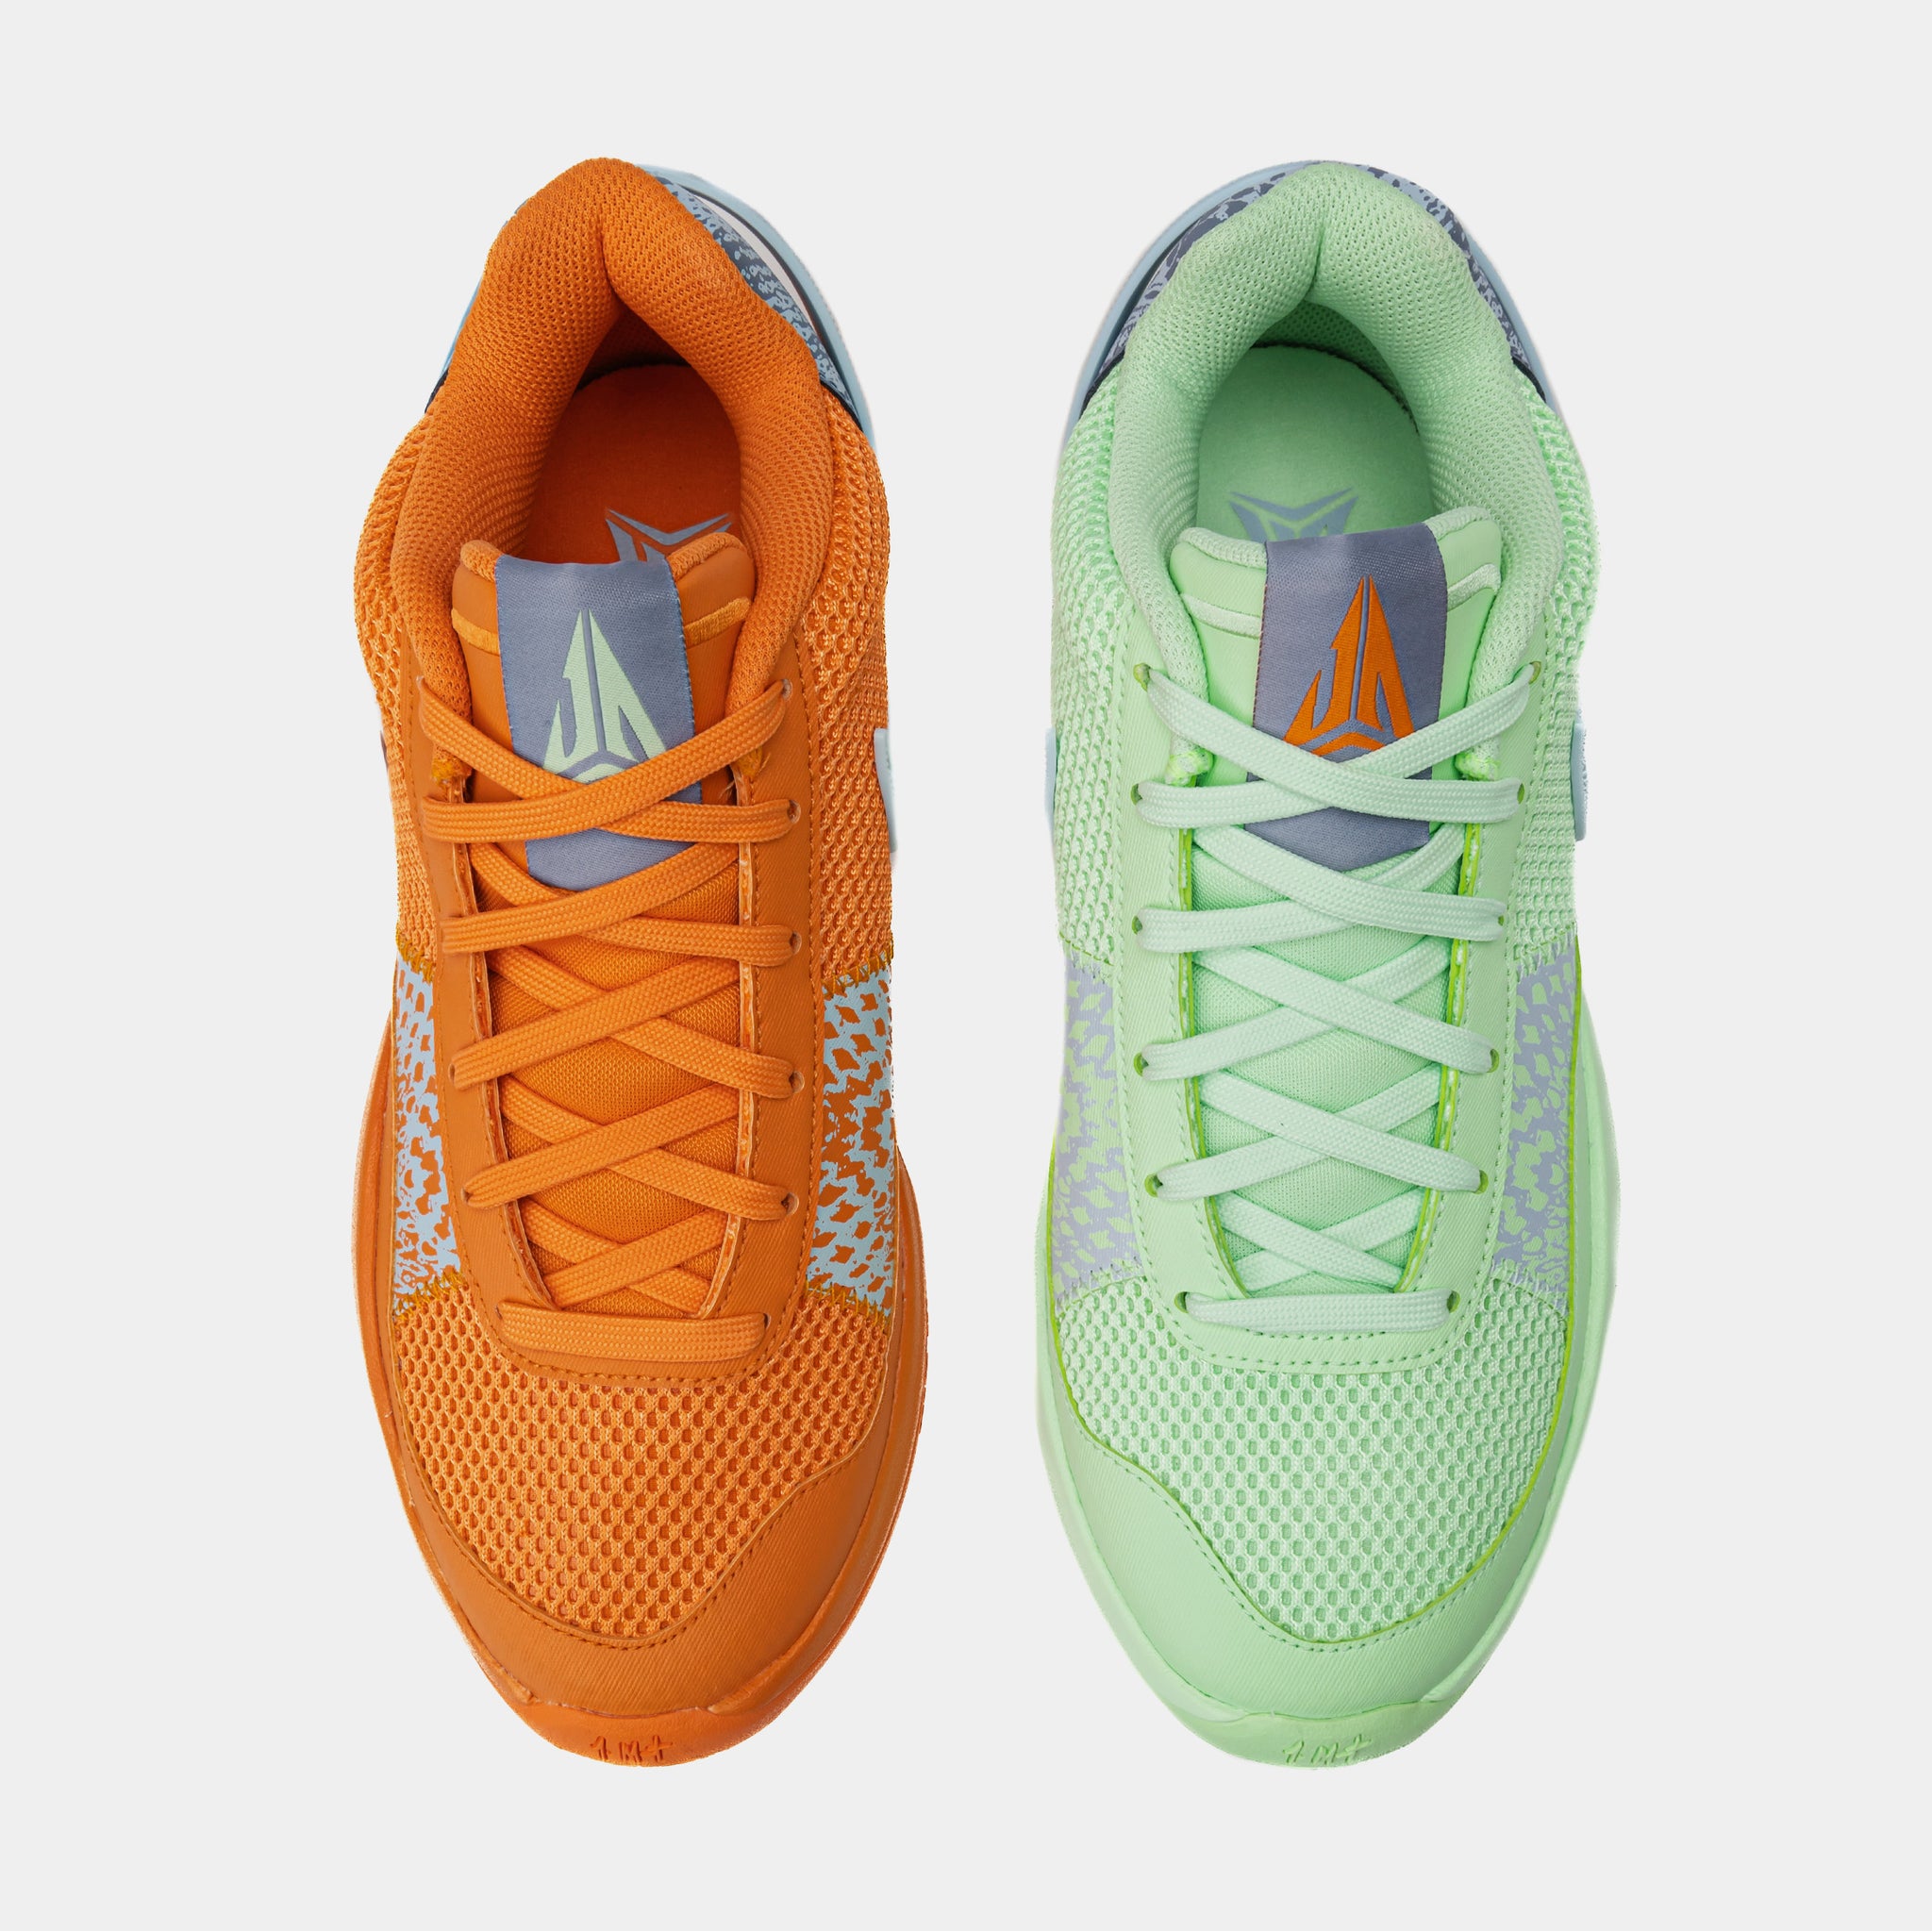 Ja 1 Day Mens Basketball Shoes (Mandarin/Multi Color/Vapor Green)